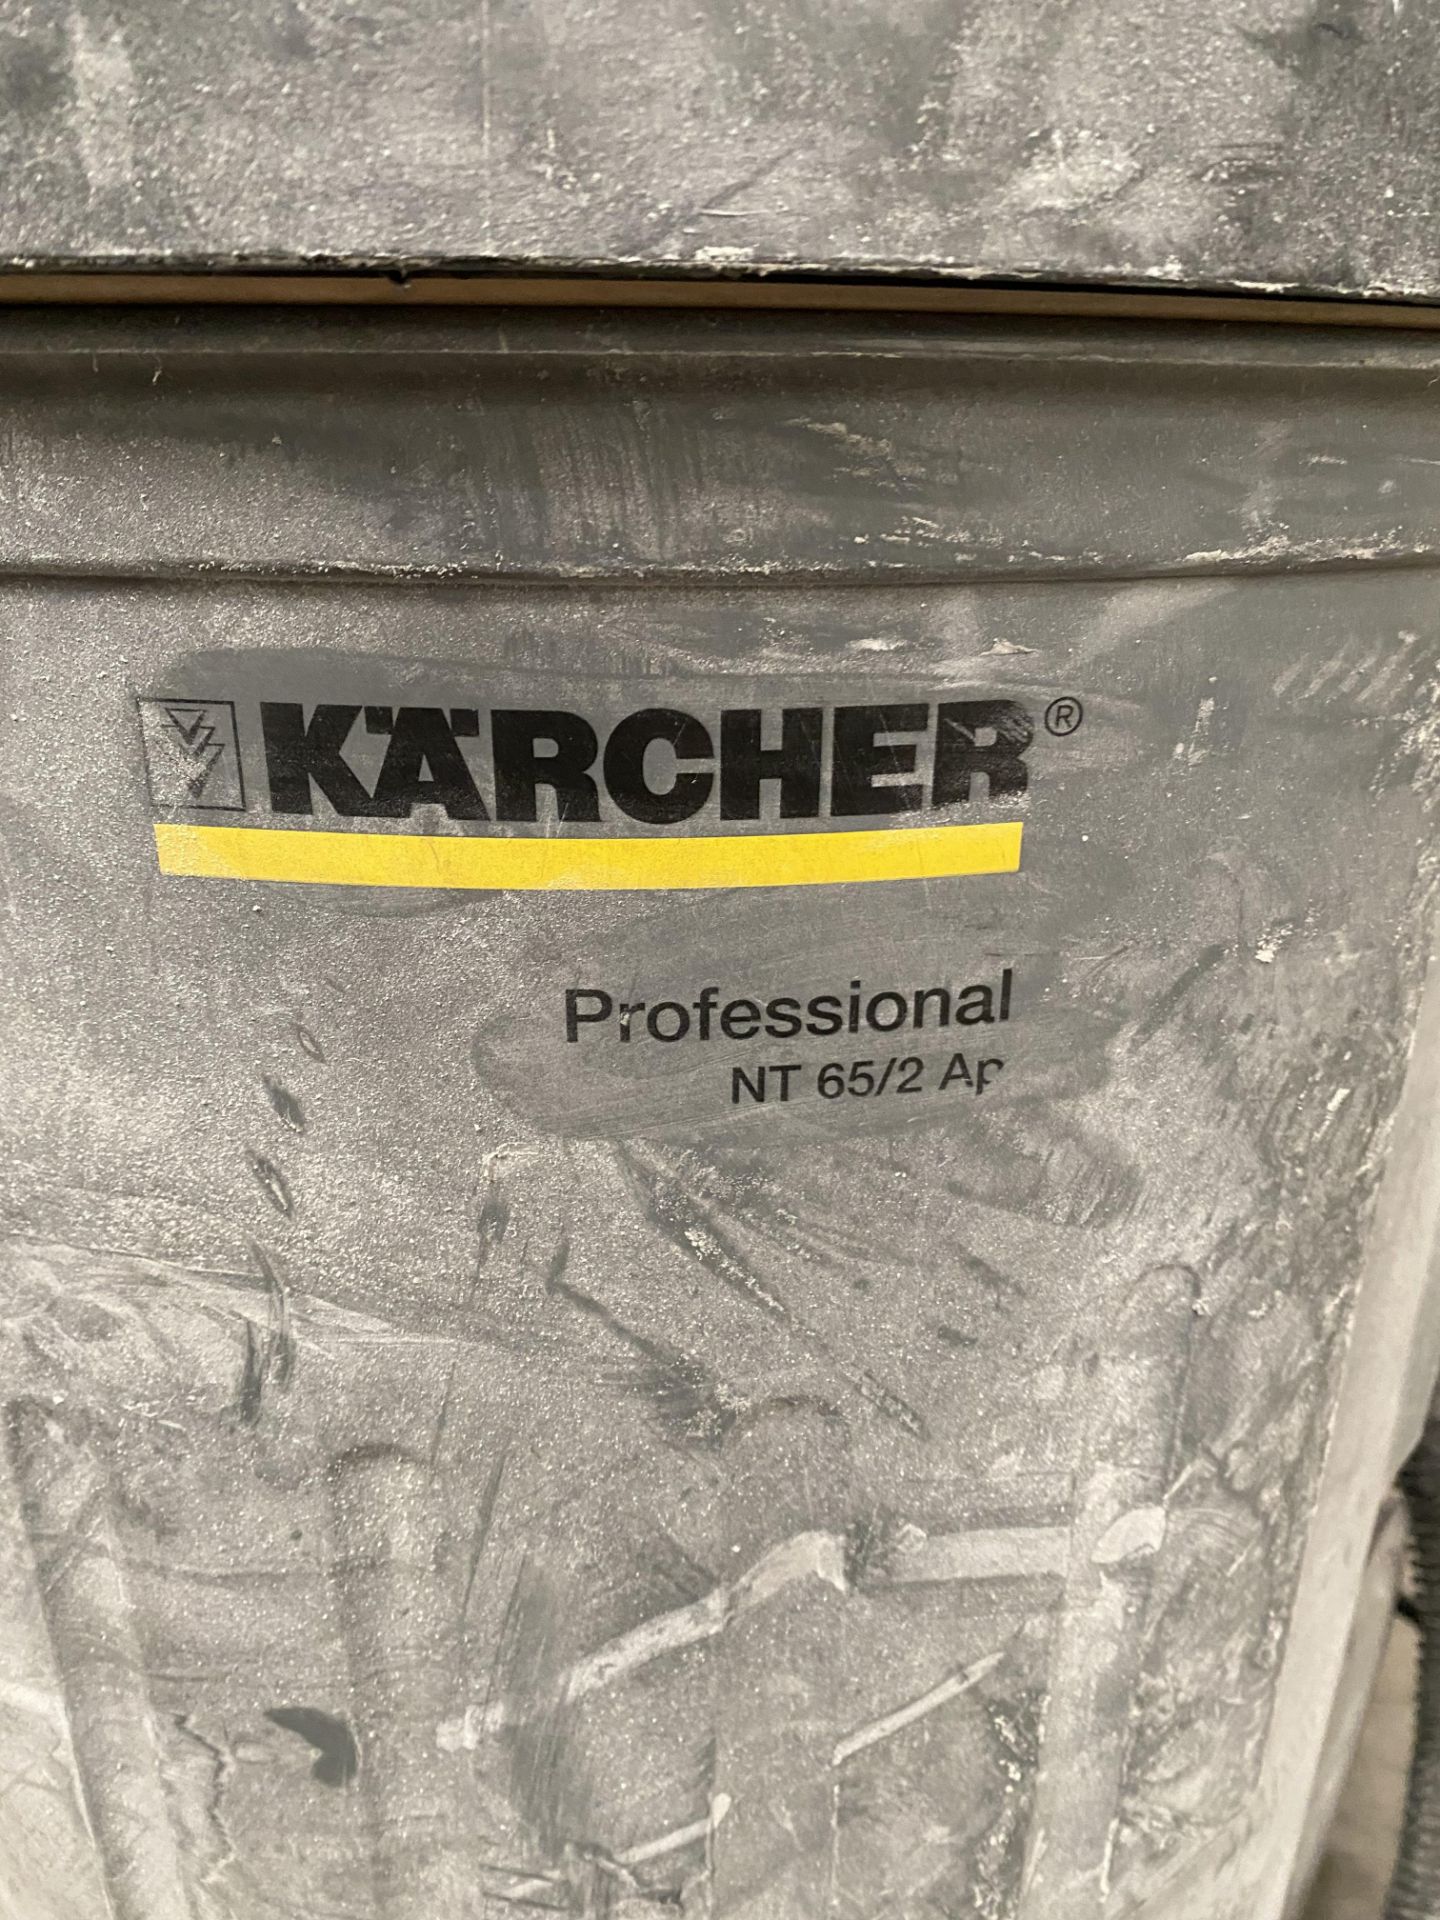 Karcher Professional vacuum, NT65/2 AP - Image 2 of 5